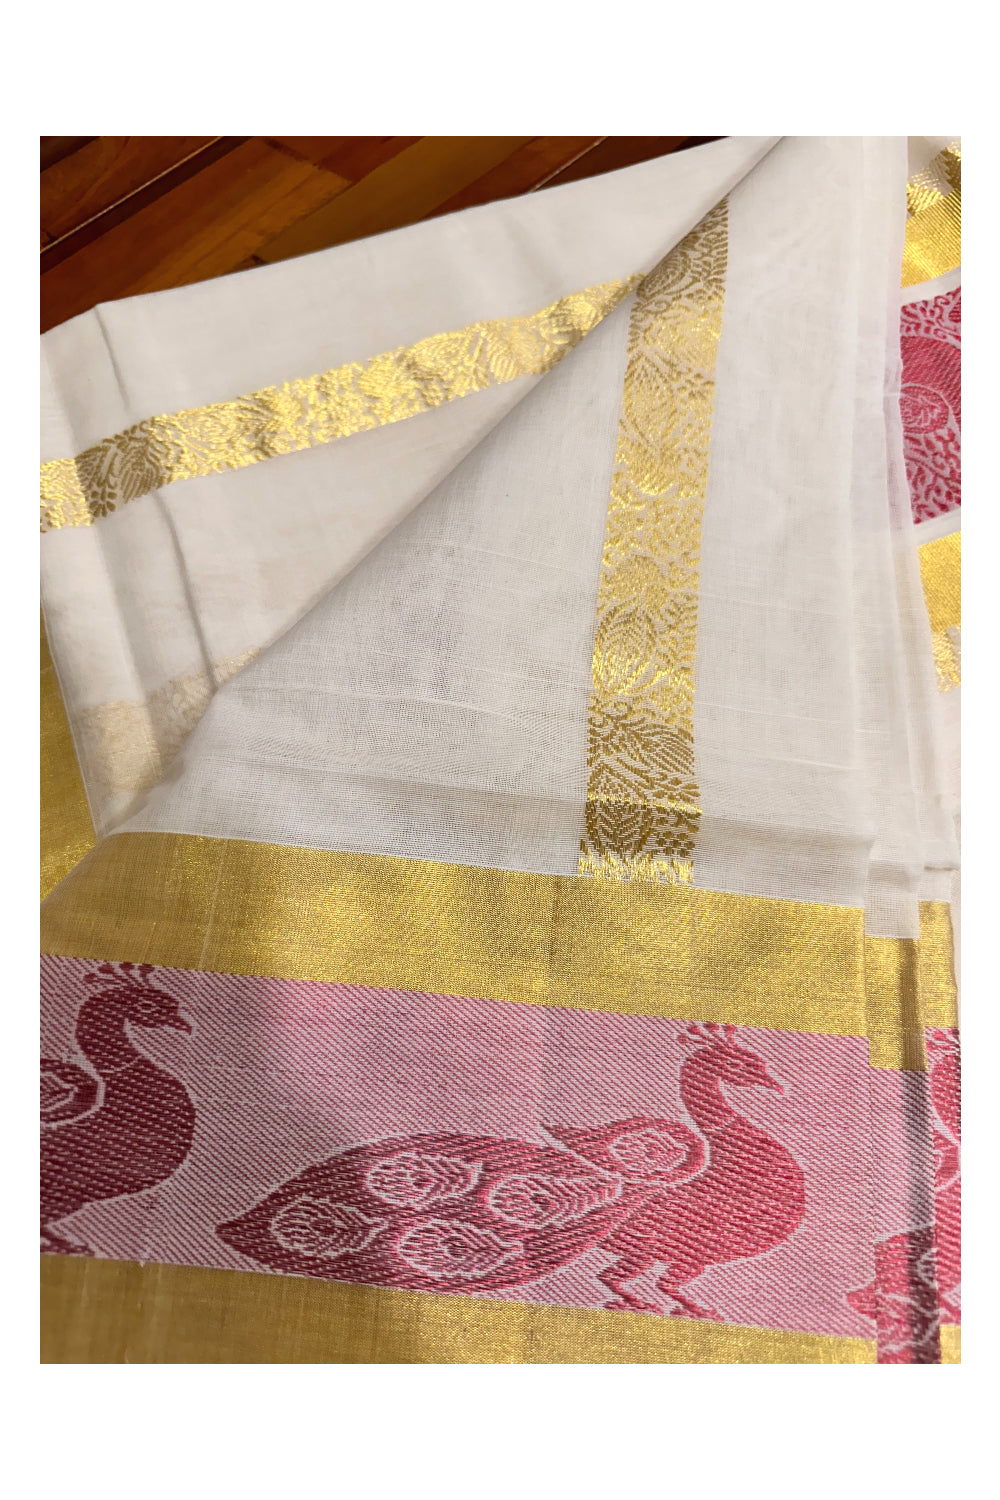 Southloom™ Premium Handloom Cotton Kasavu Saree with Copper Peacock Design Woven on Pallu and Border